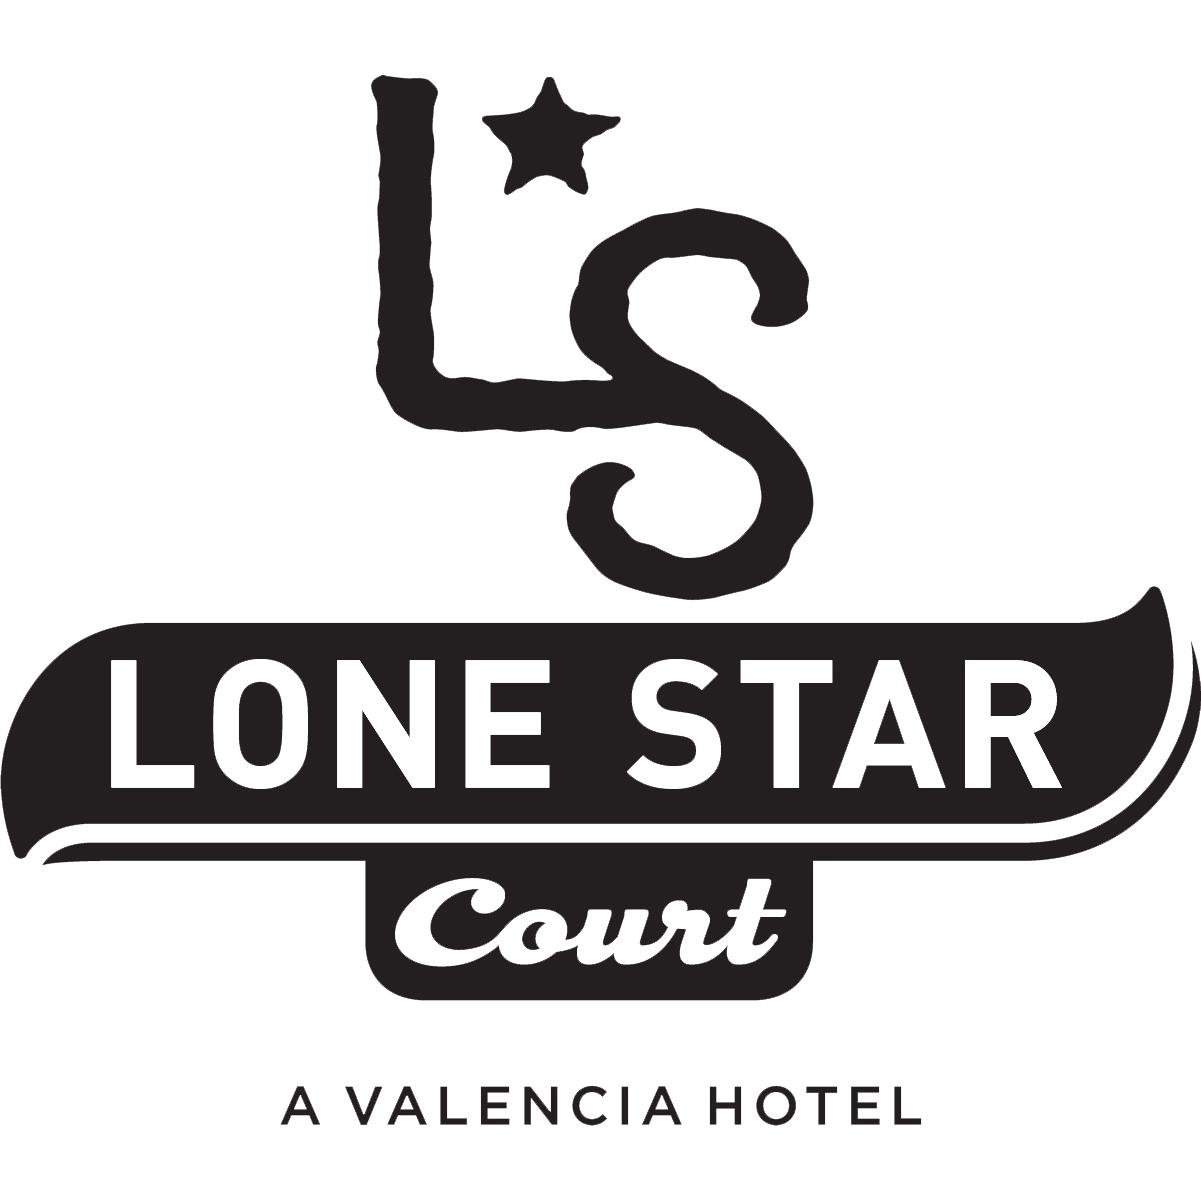 Lone Star Court Logo